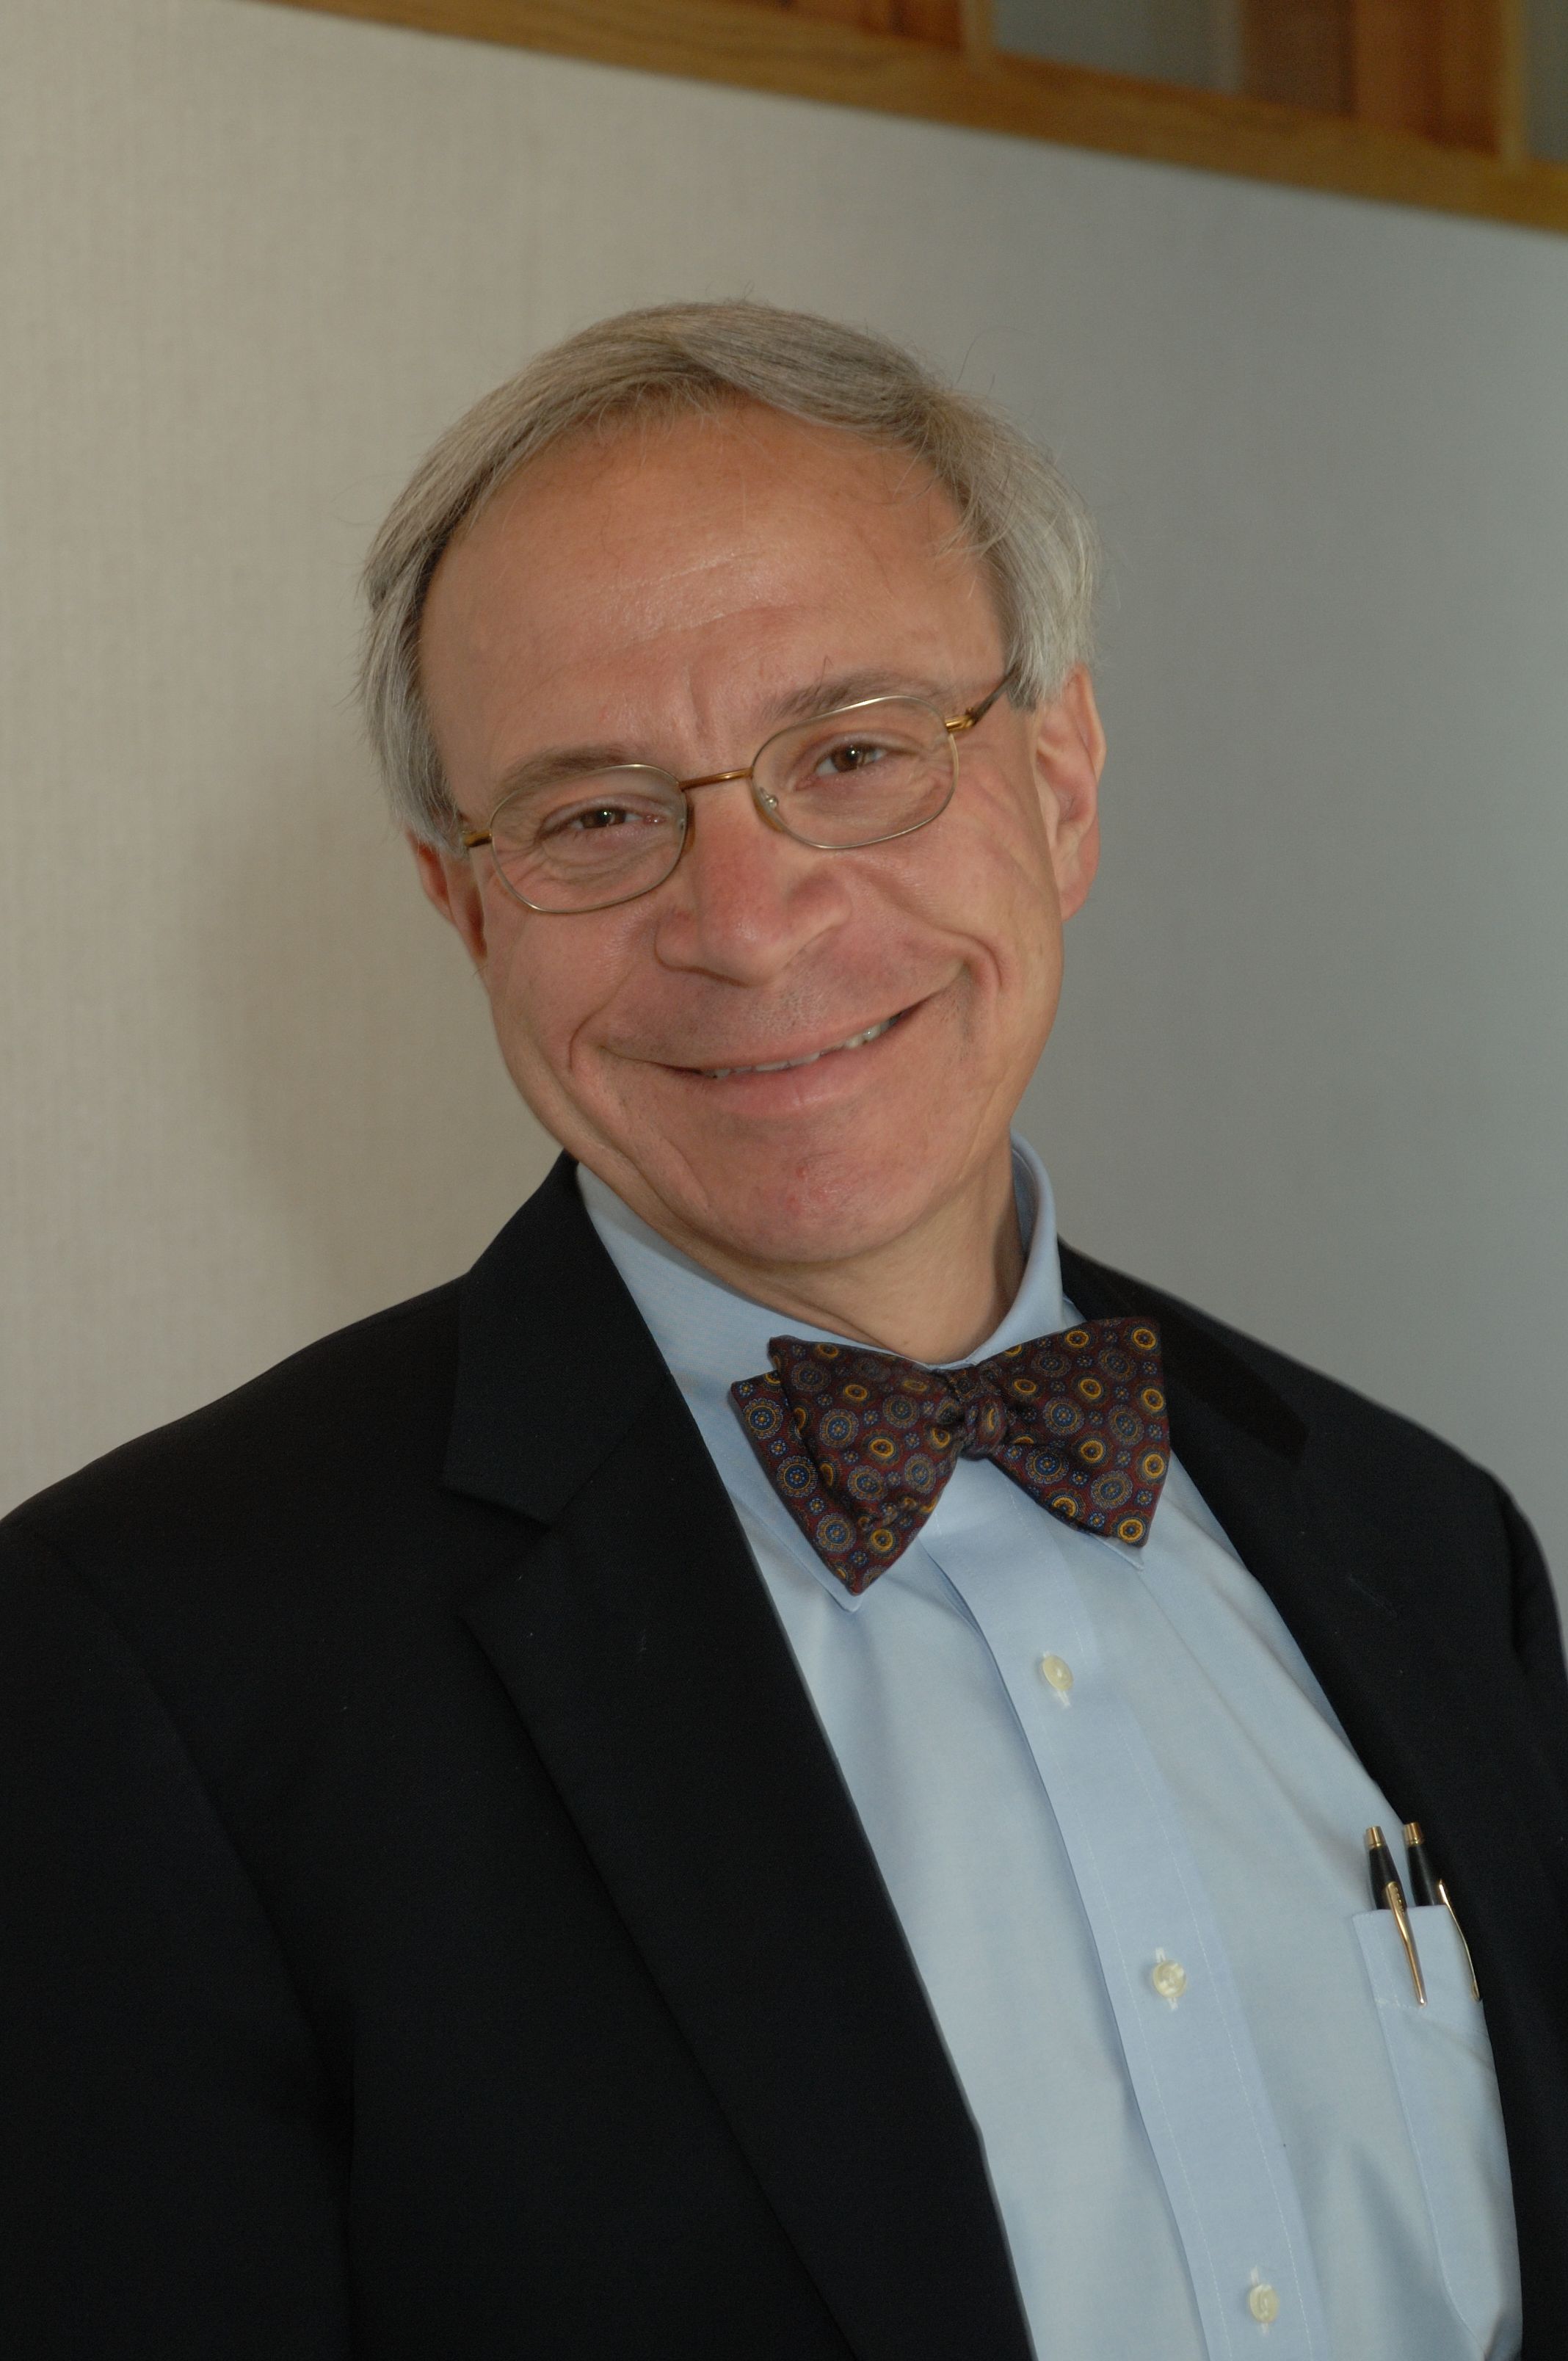 Dr. Mark Zeidel